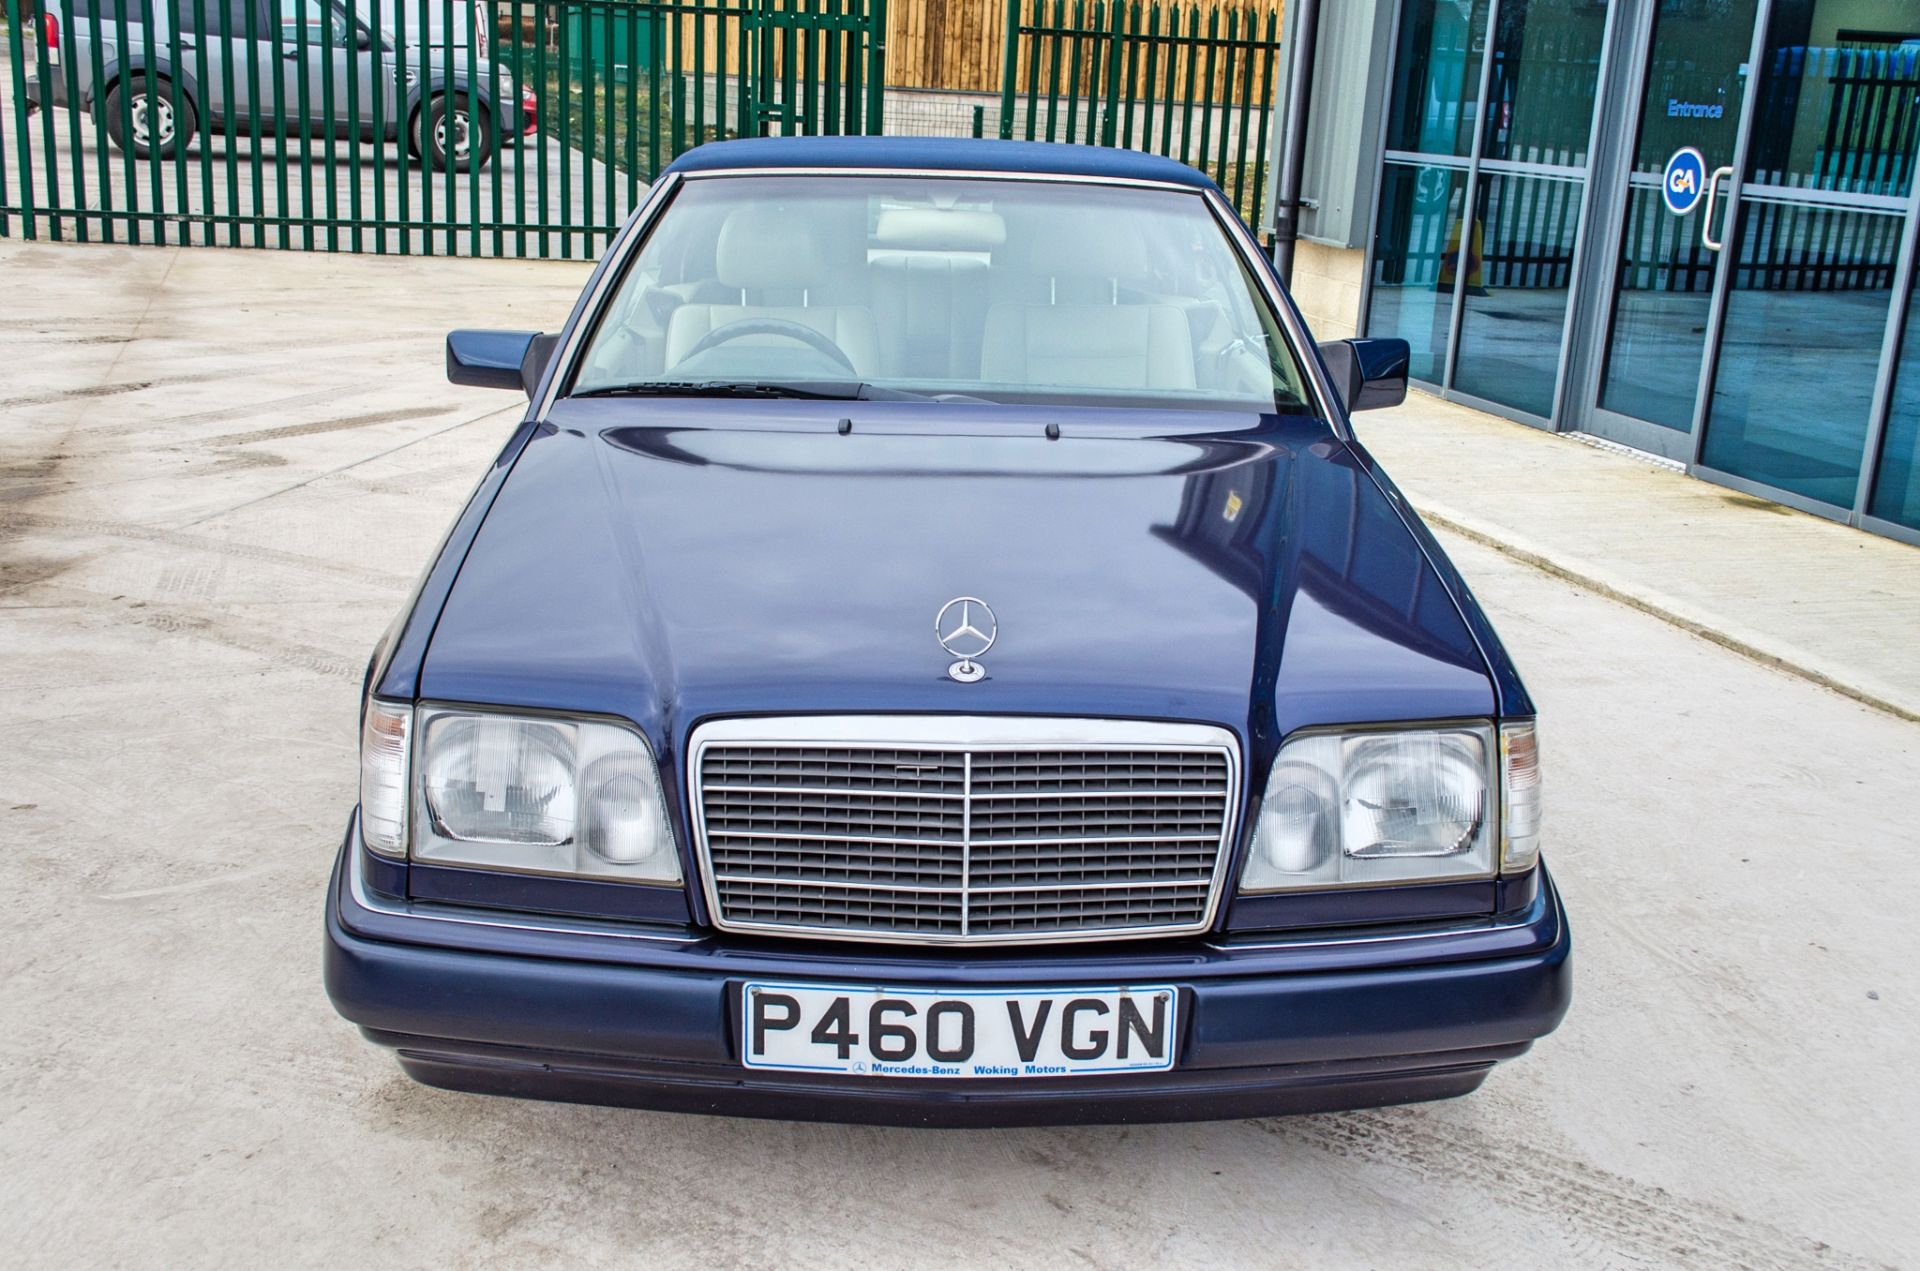 1997 Mercedes E220 2.2 litre 2 door cabriolet - Image 26 of 60